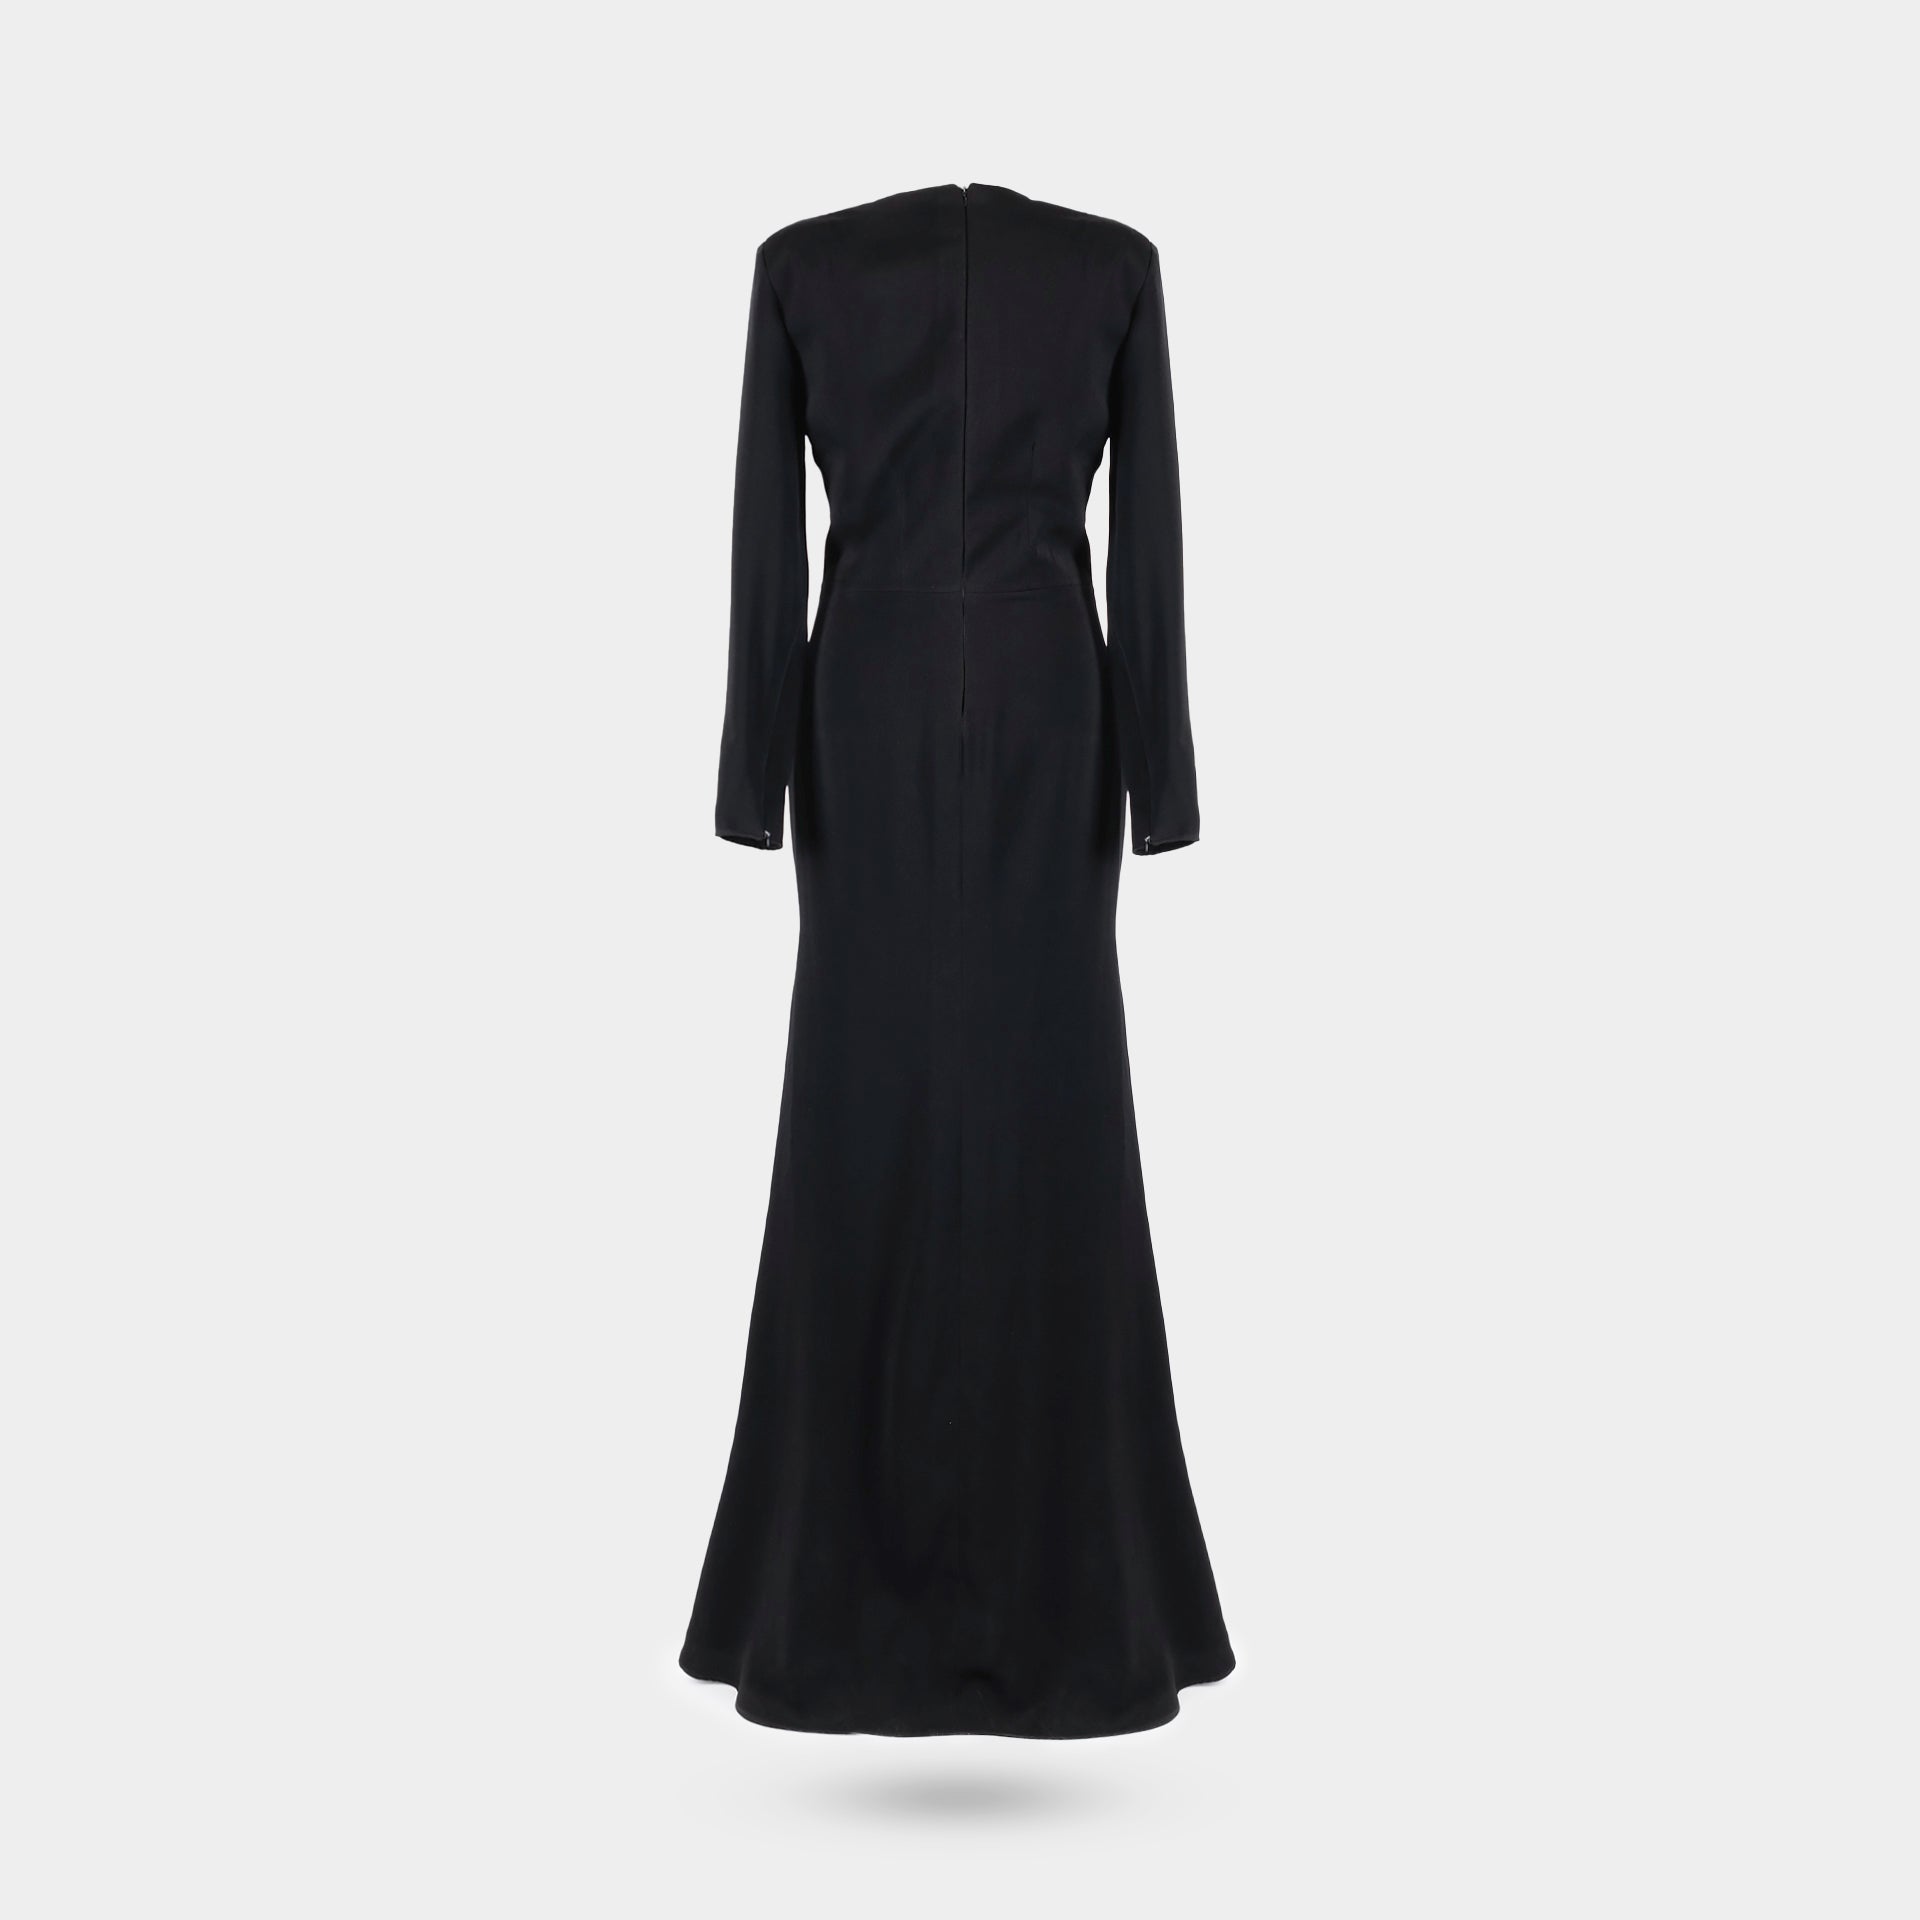 BLACK SATIN CREPE DRESS BY IVORI